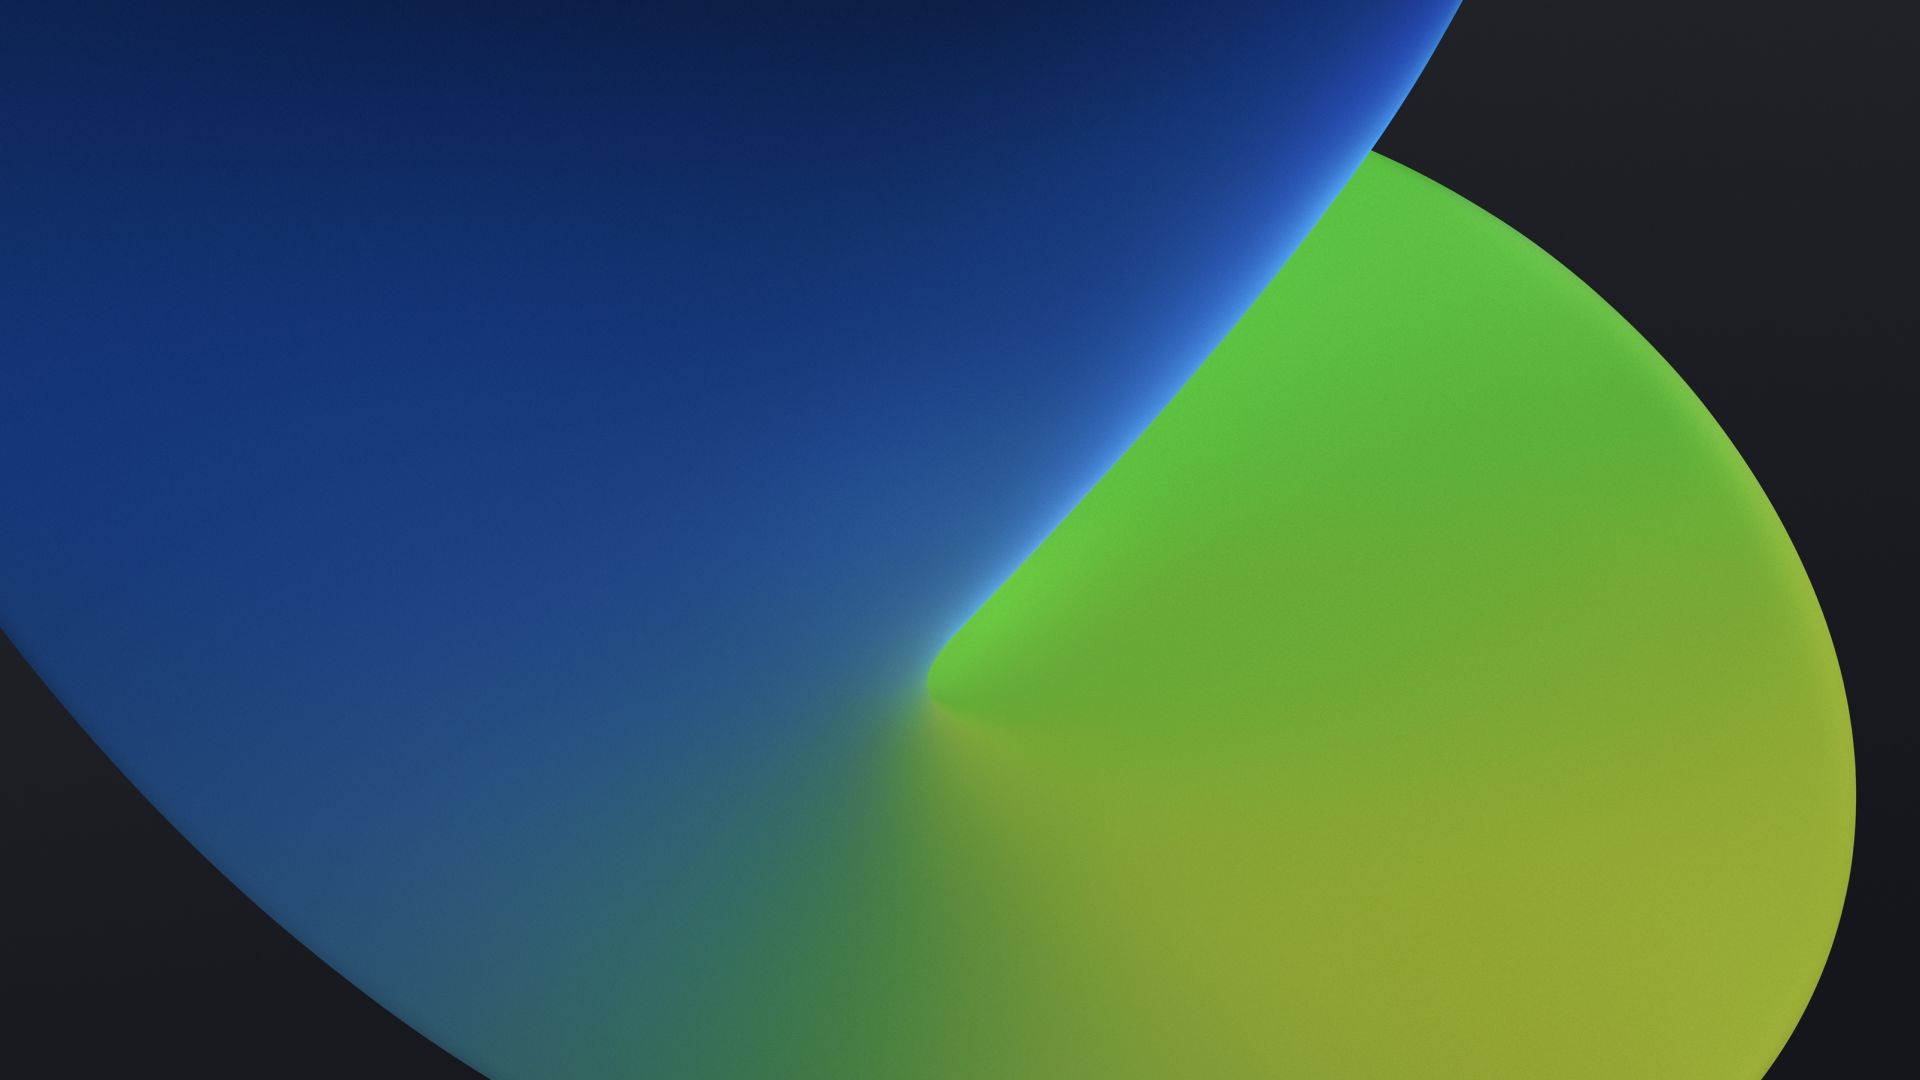 Wallpaper Blue-green shape, abstract, iPad OS 14